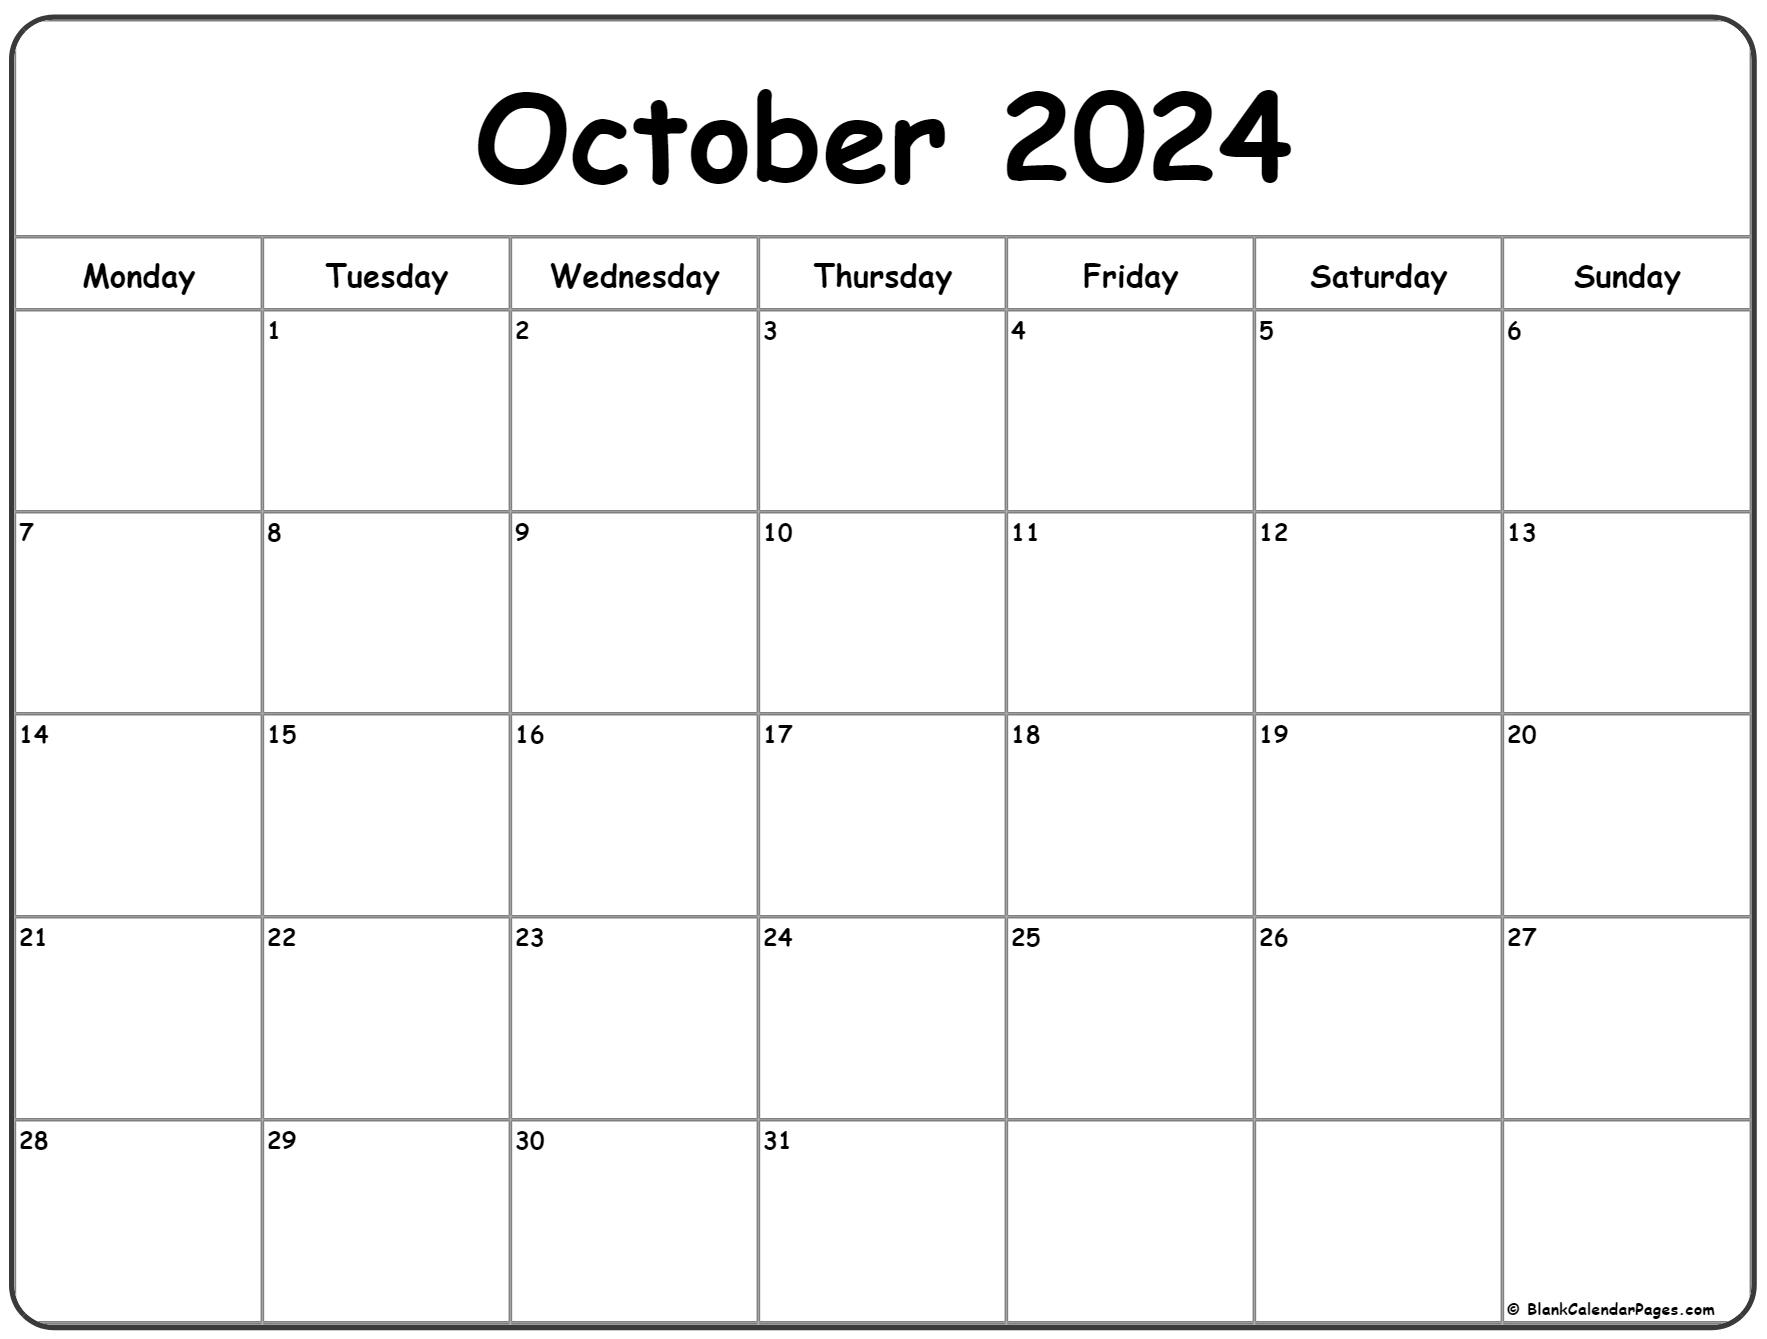 October 2024 Monday calendar. Monday to Sunday